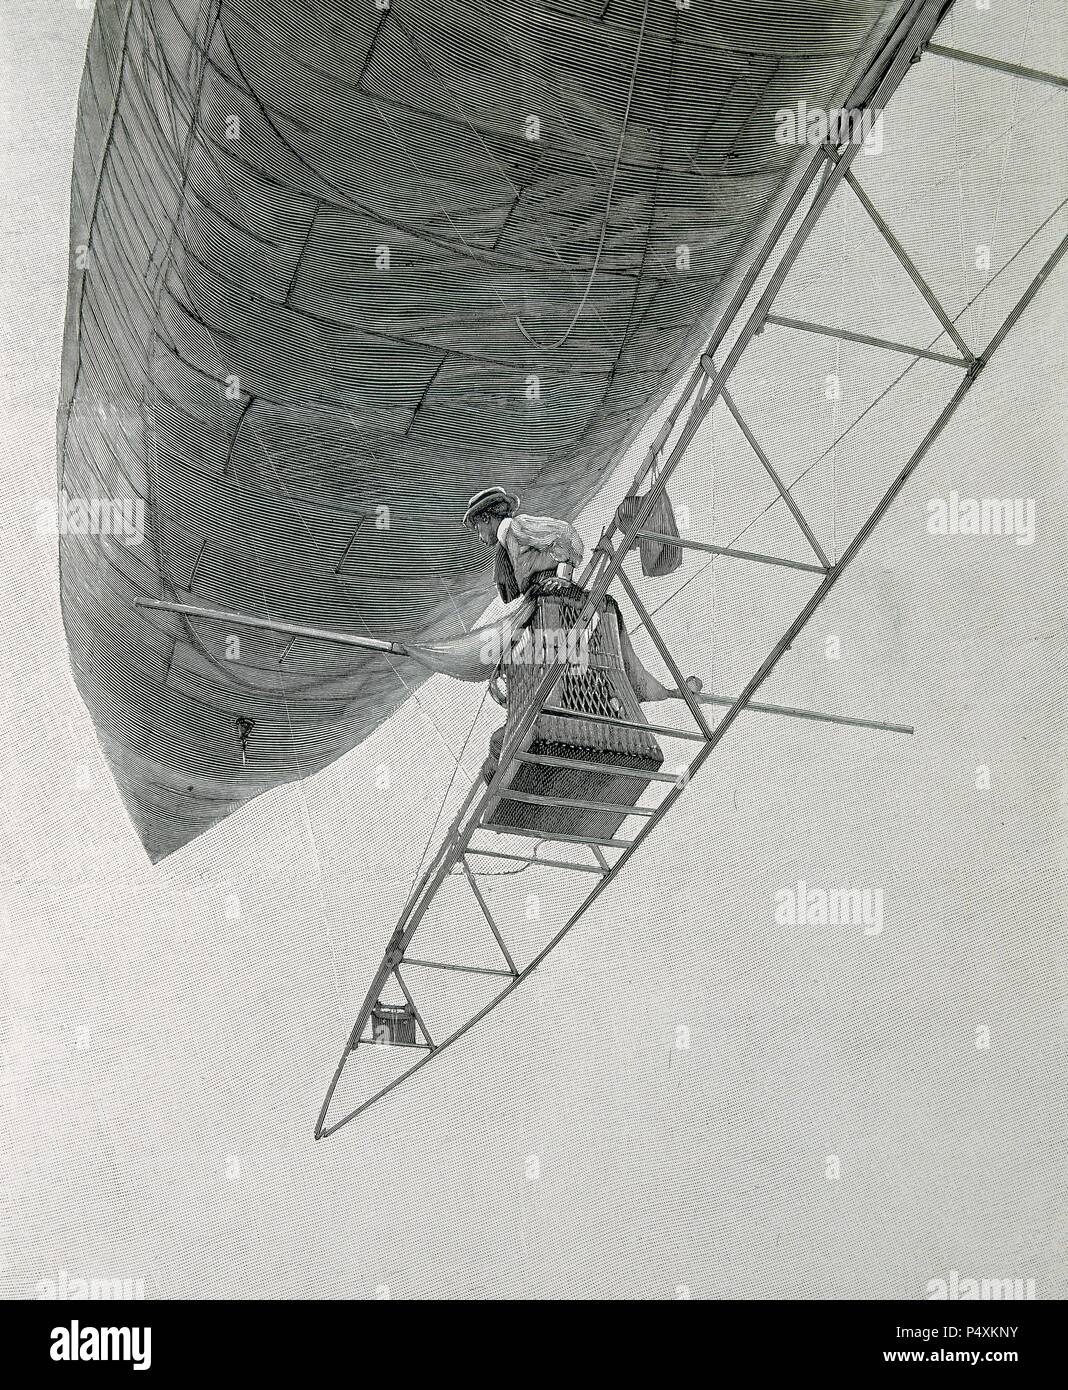 Alberto Santos-Dumont (1873-1932). Brazilian aviation pioneer and engineer. Santos-Dumont flying in a dirigible. Engraving in  'L'Illustration' (1901). Stock Photo